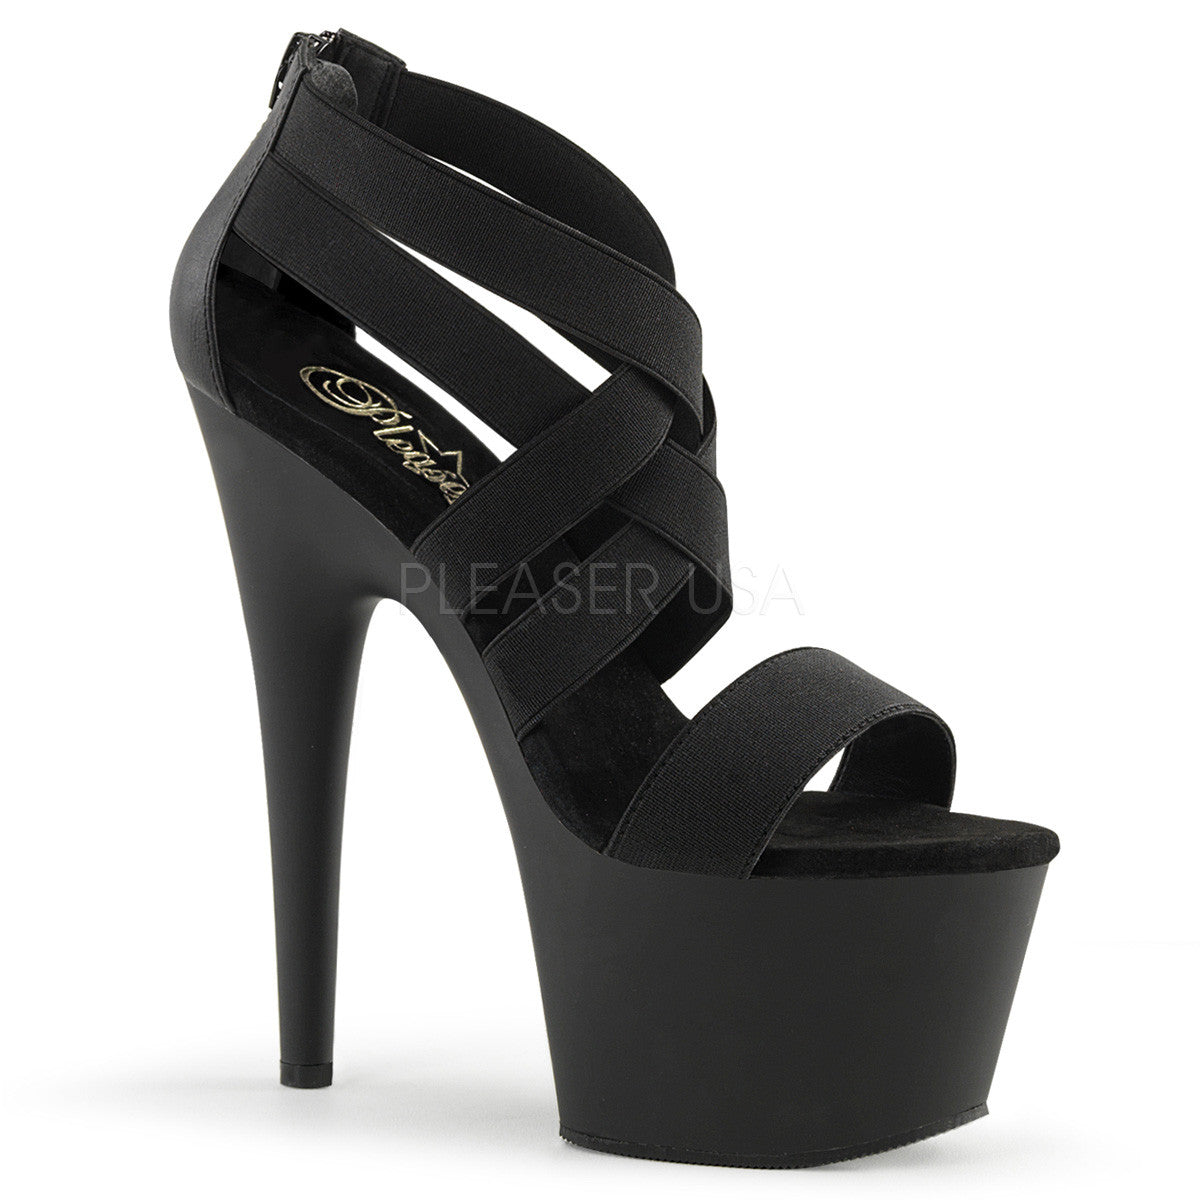 Pleaser ADORE-769 Black Matte Exotic Dancing Sandals - Shoecup.com - 1